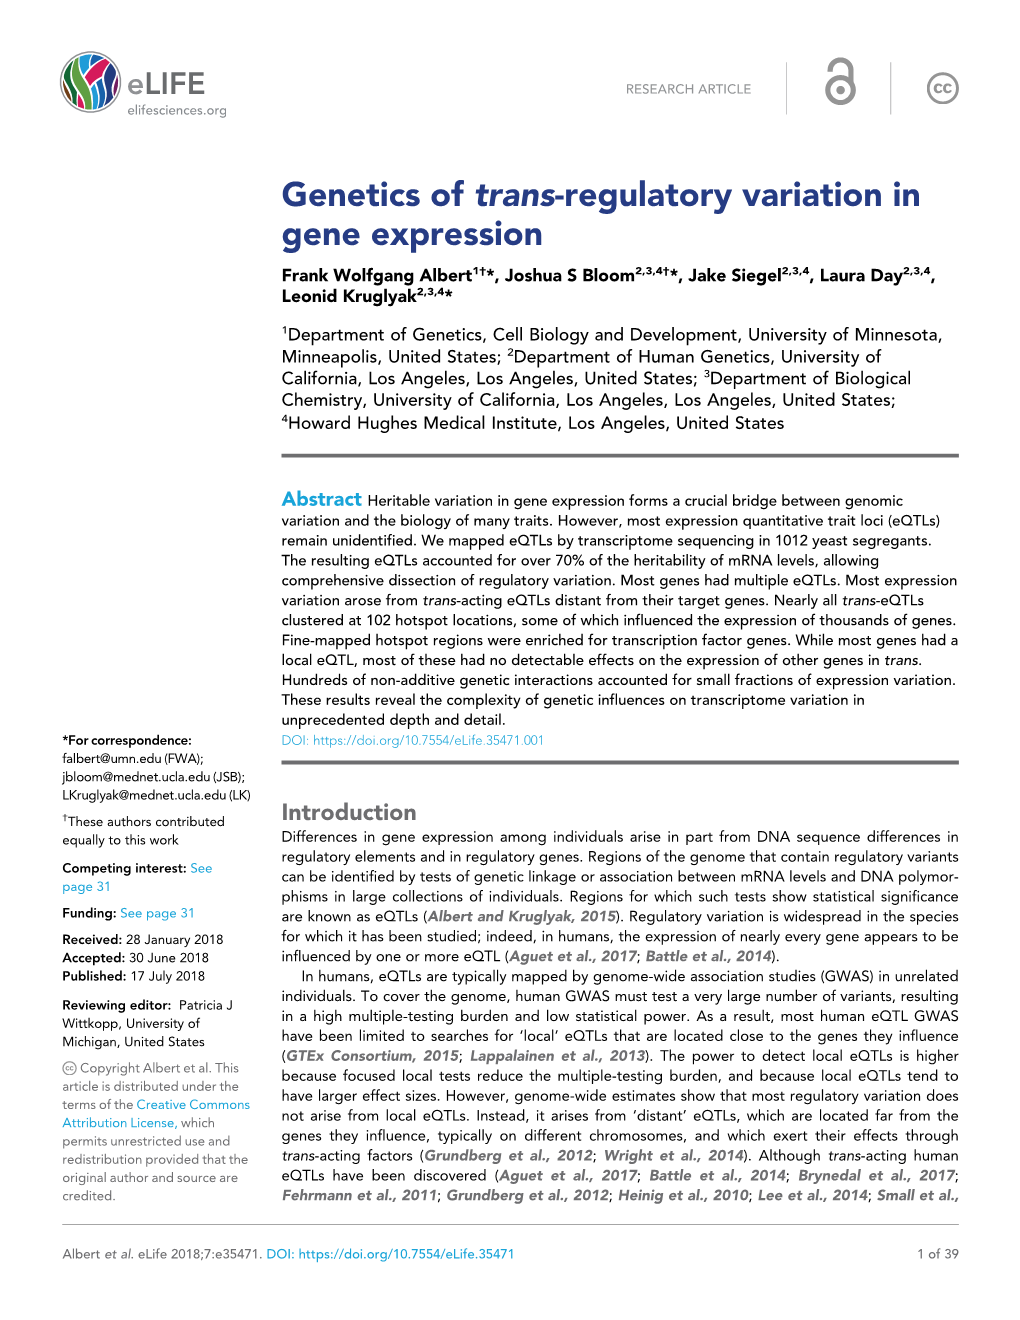 Genetics of Trans-Regulatory Variation in Gene Expression Frank Wolfgang Albert1†*, Joshua S Bloom2,3,4†*, Jake Siegel2,3,4, Laura Day2,3,4, Leonid Kruglyak2,3,4*